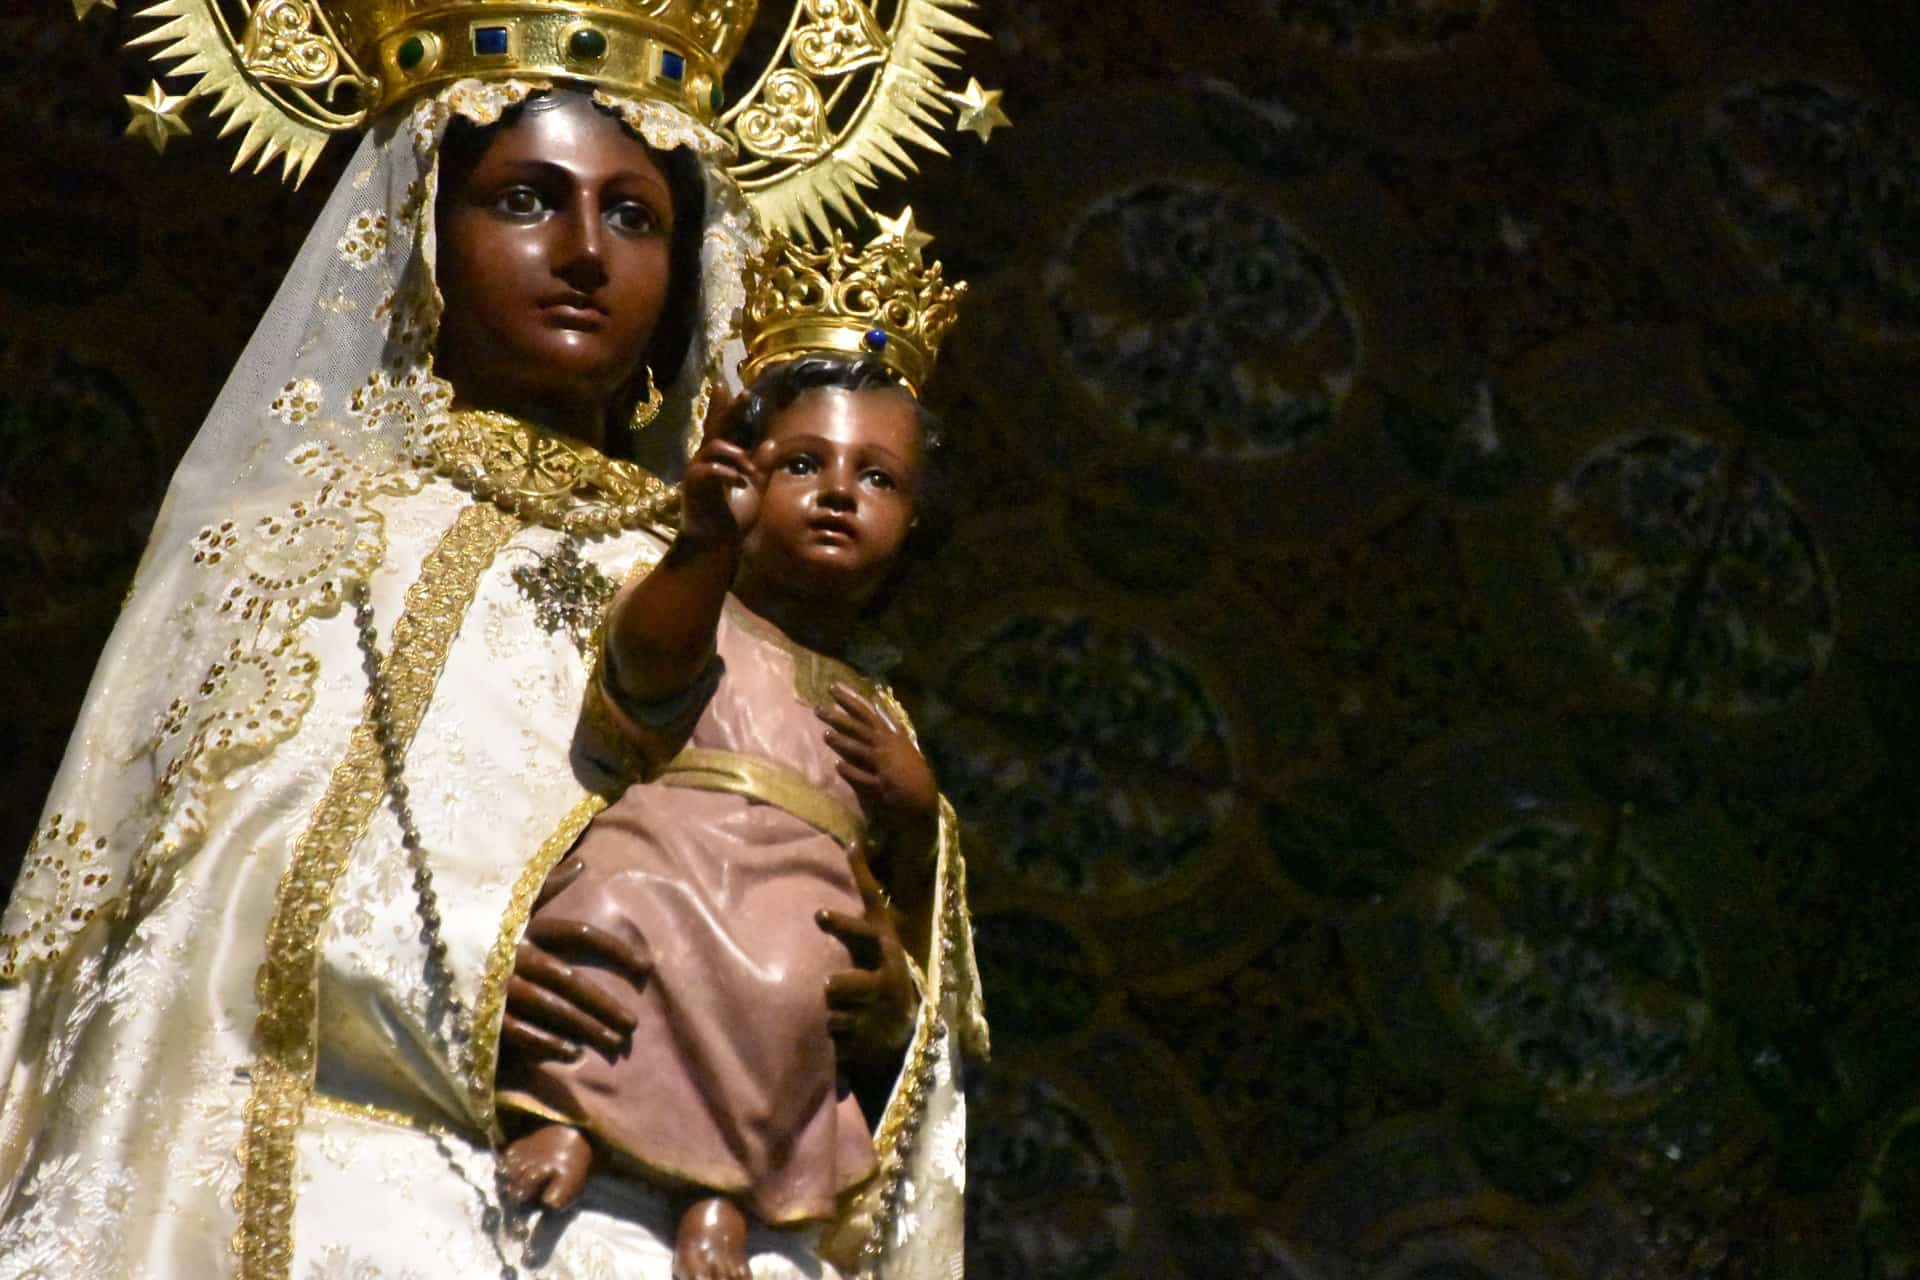 the statue of 'Our Lady of La Peña de Francia' in the monastery church at La Peña de Francia in Spain